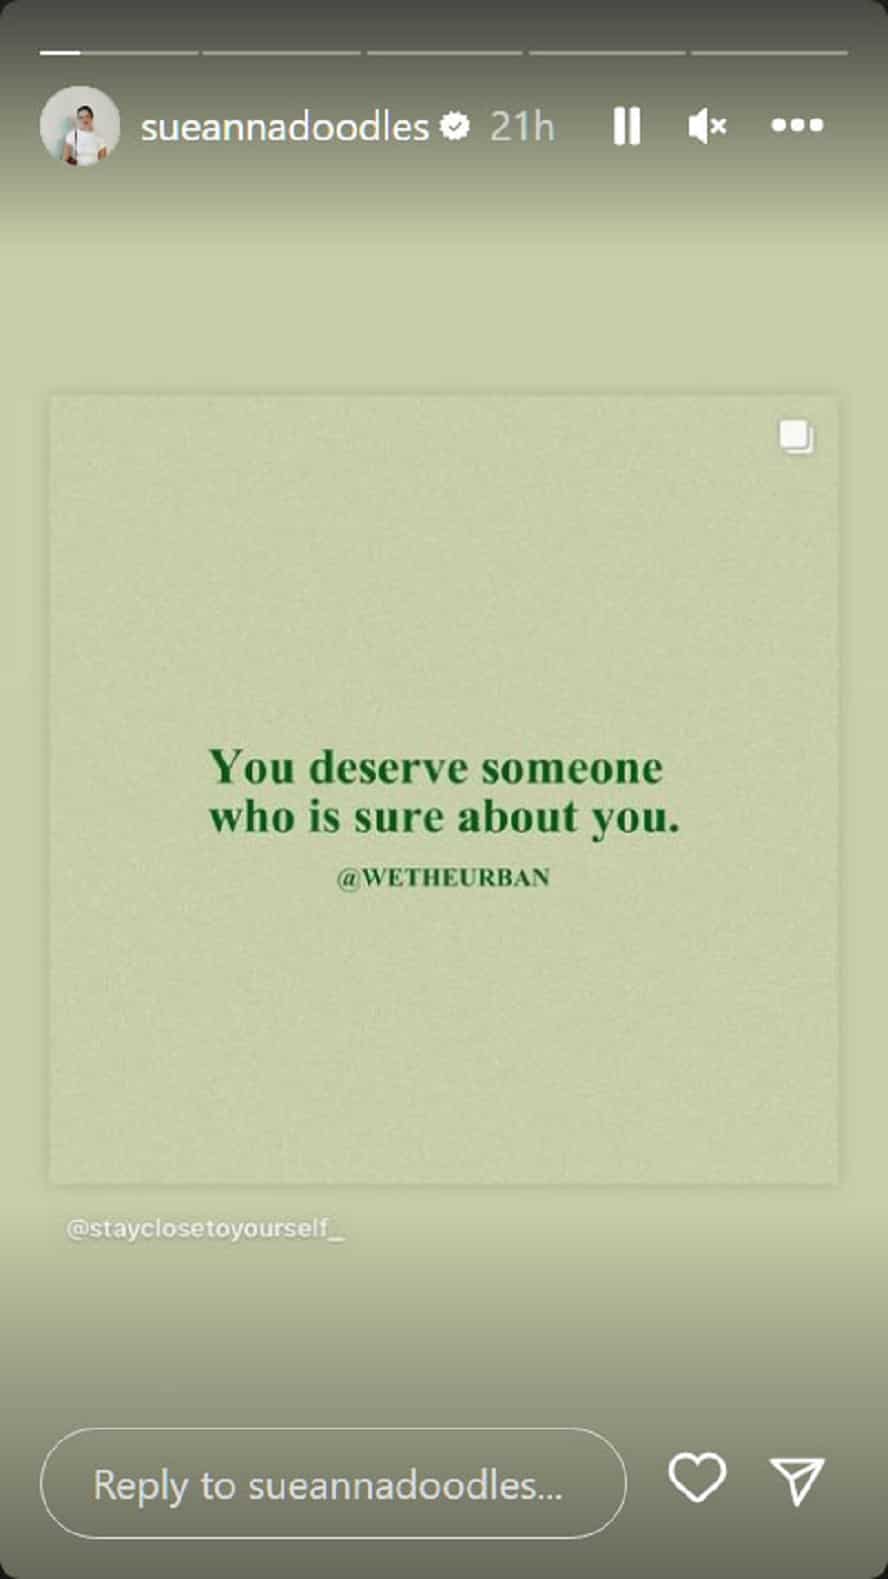 Sue Ramirez, cryptic post niya sa social media, usap-usapan: “You deserve someone who is sure about you”